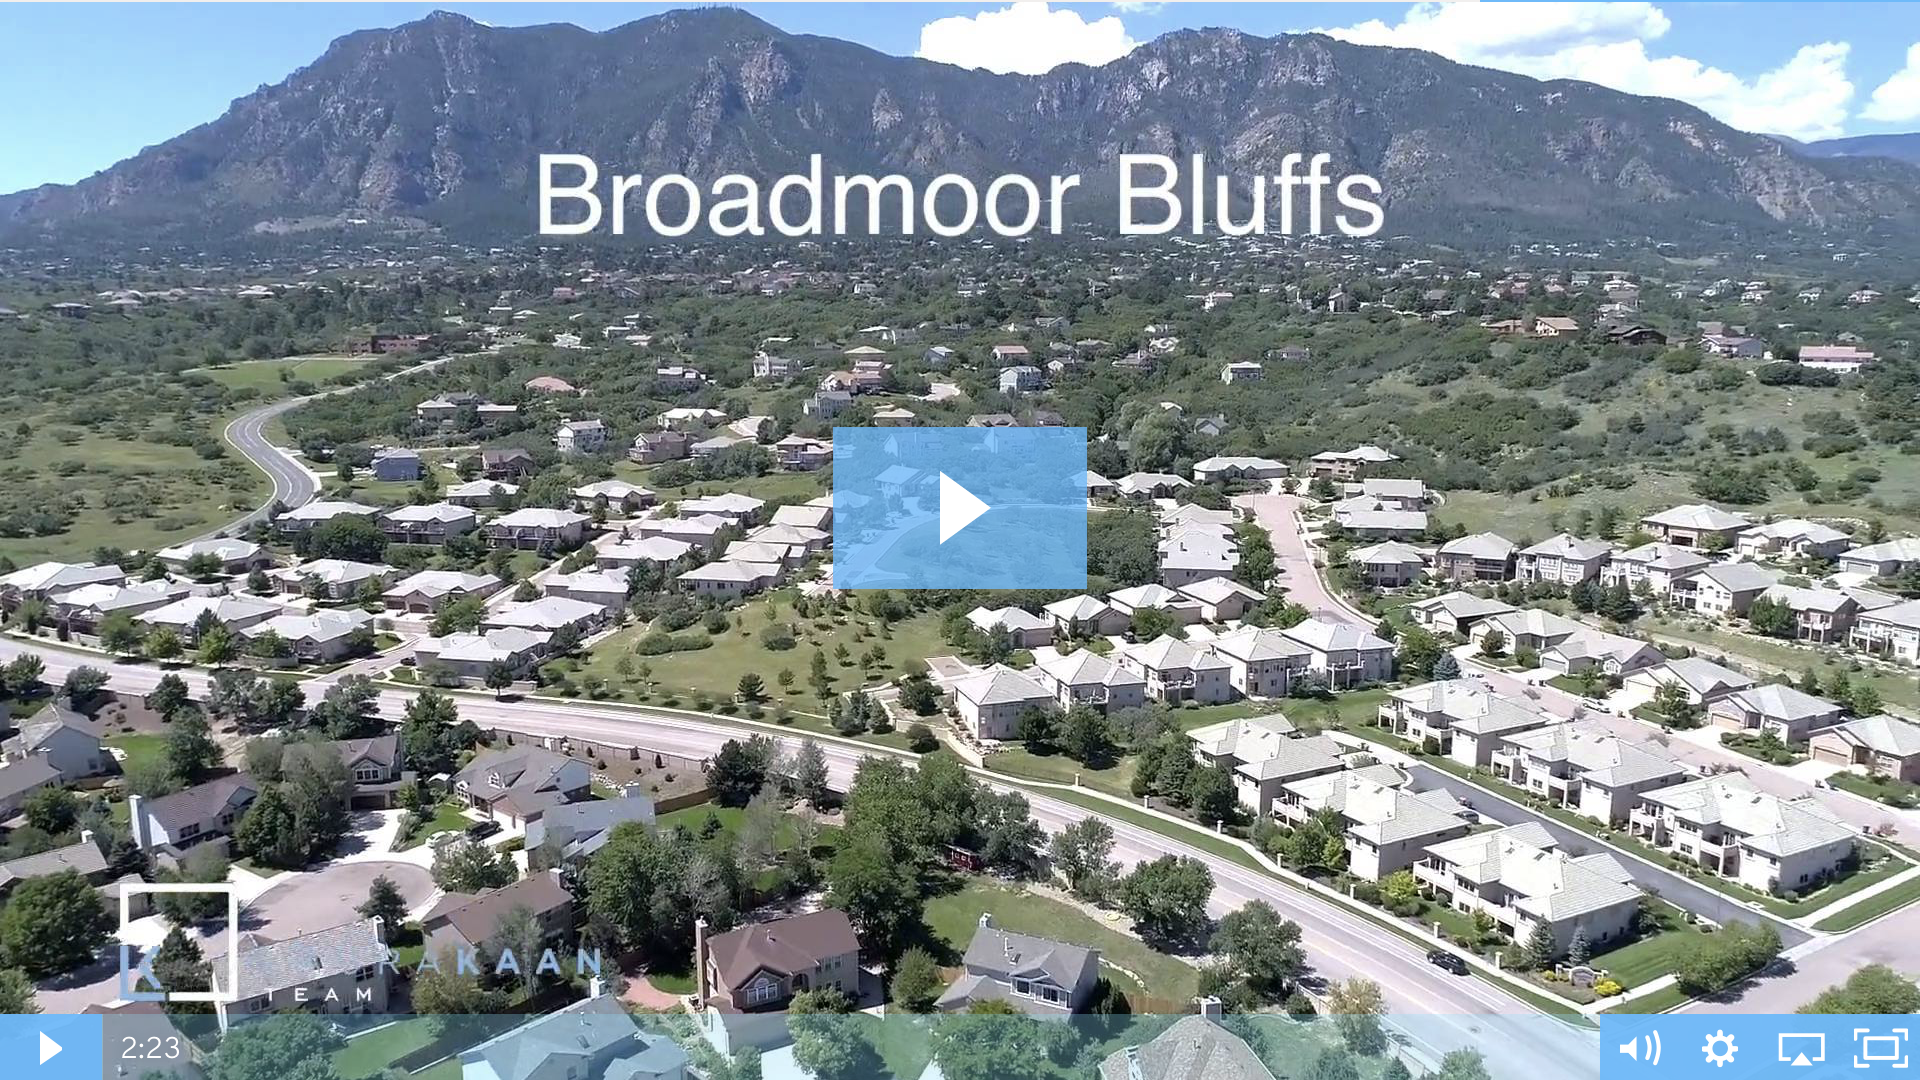 Broadmoor Bluffs